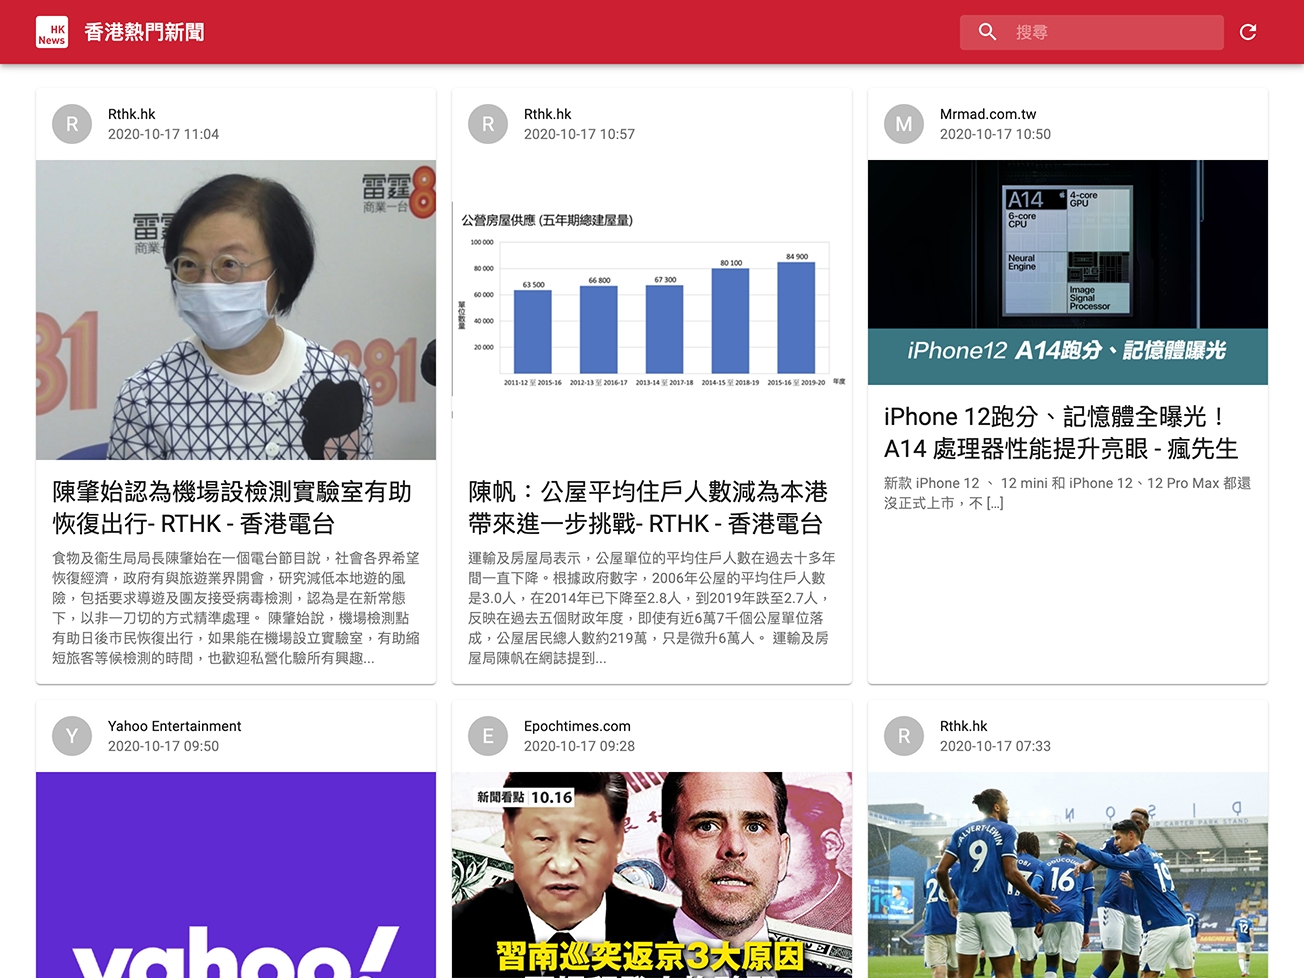 Screenshot of "Hong Kong Top News" UI